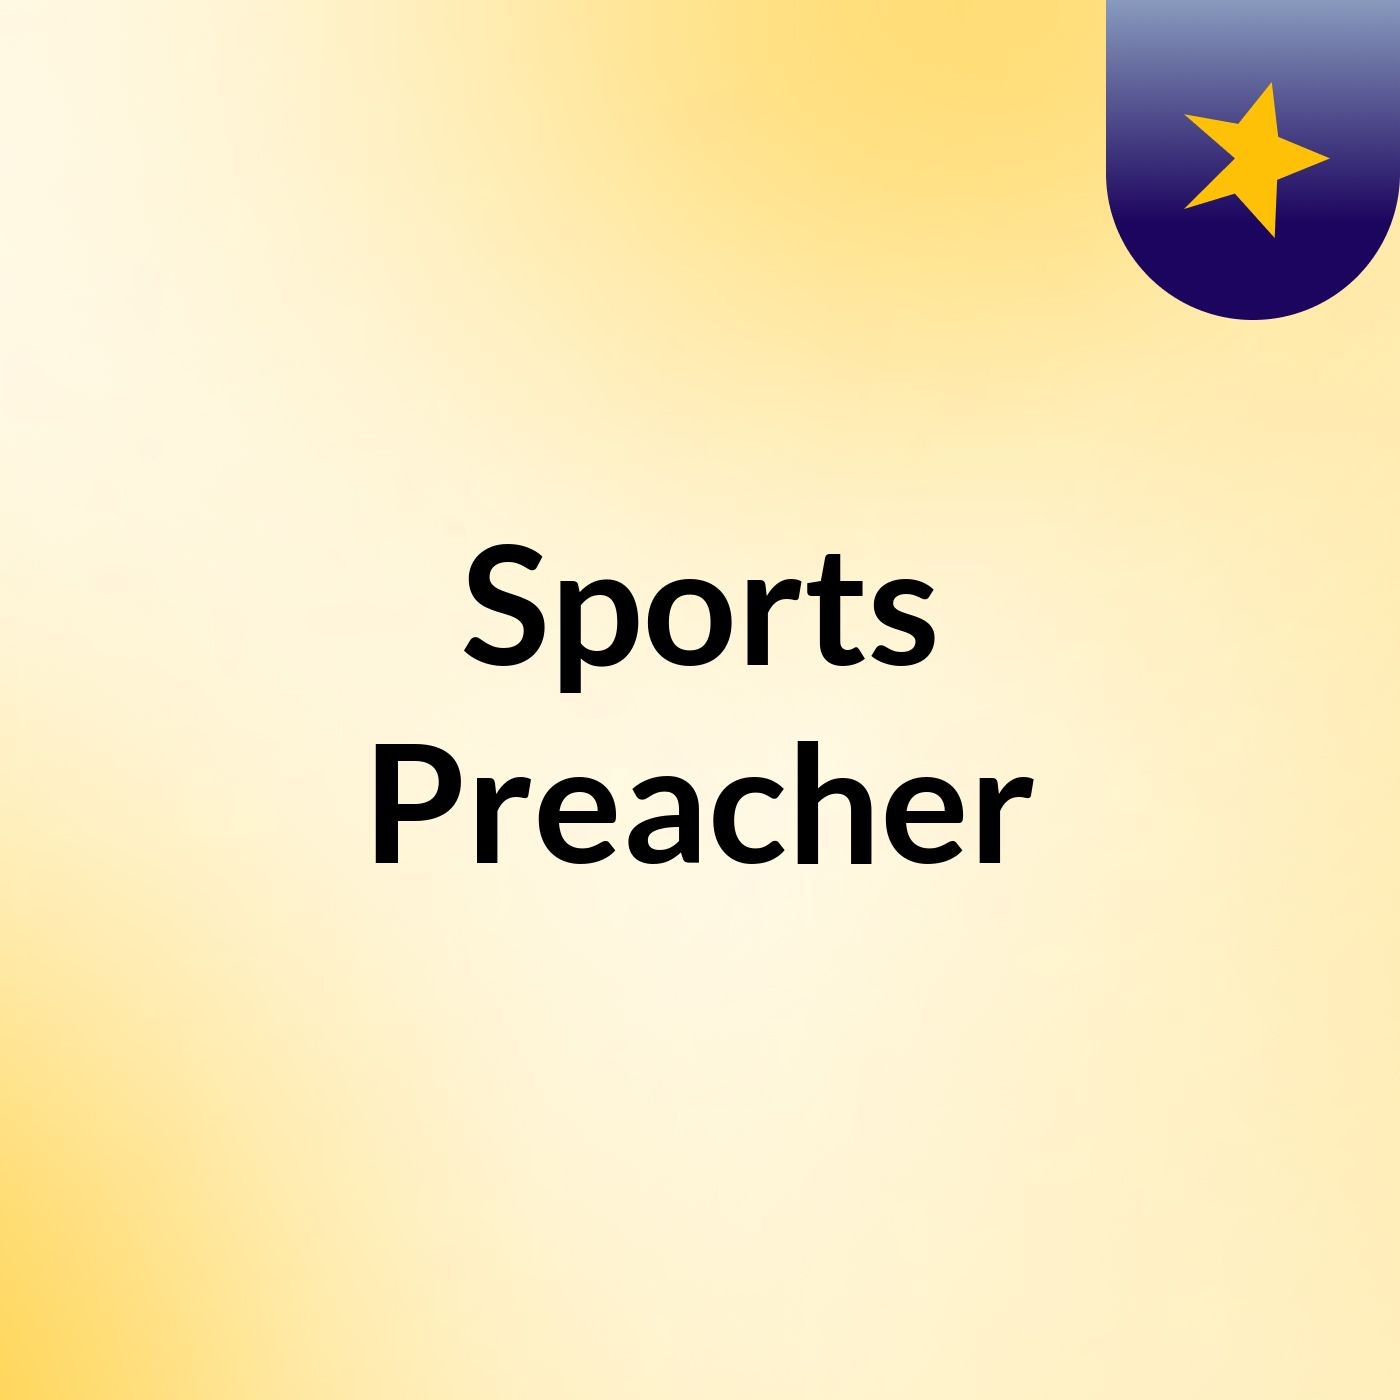 Sports Preacher